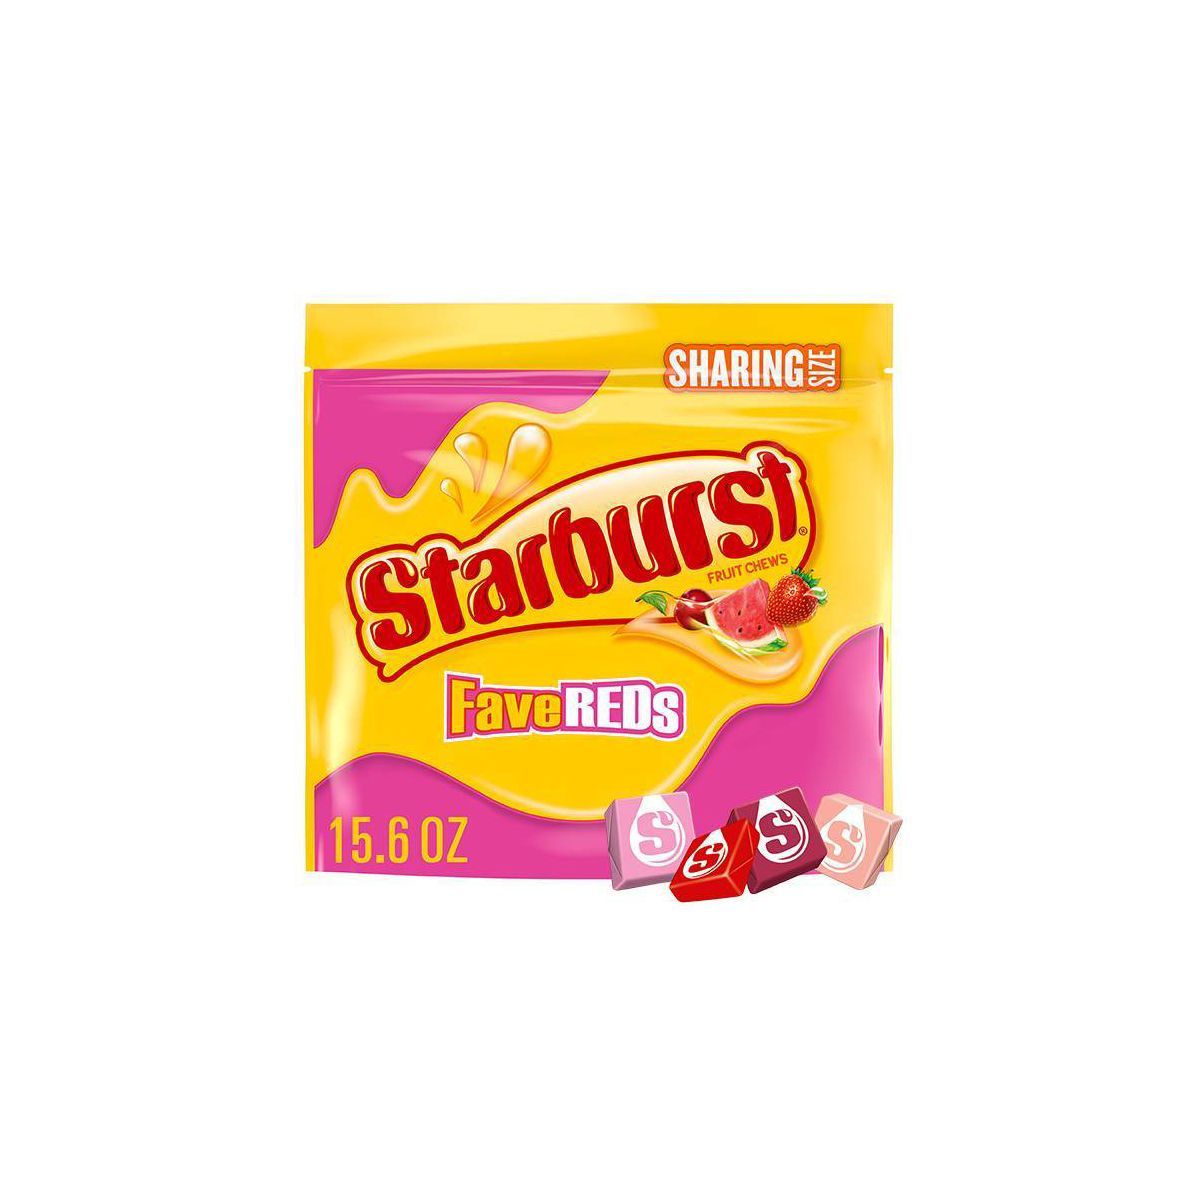 Starburst FaveREDs Sharing Size Candy Fruit Chews - 15.6oz | Target